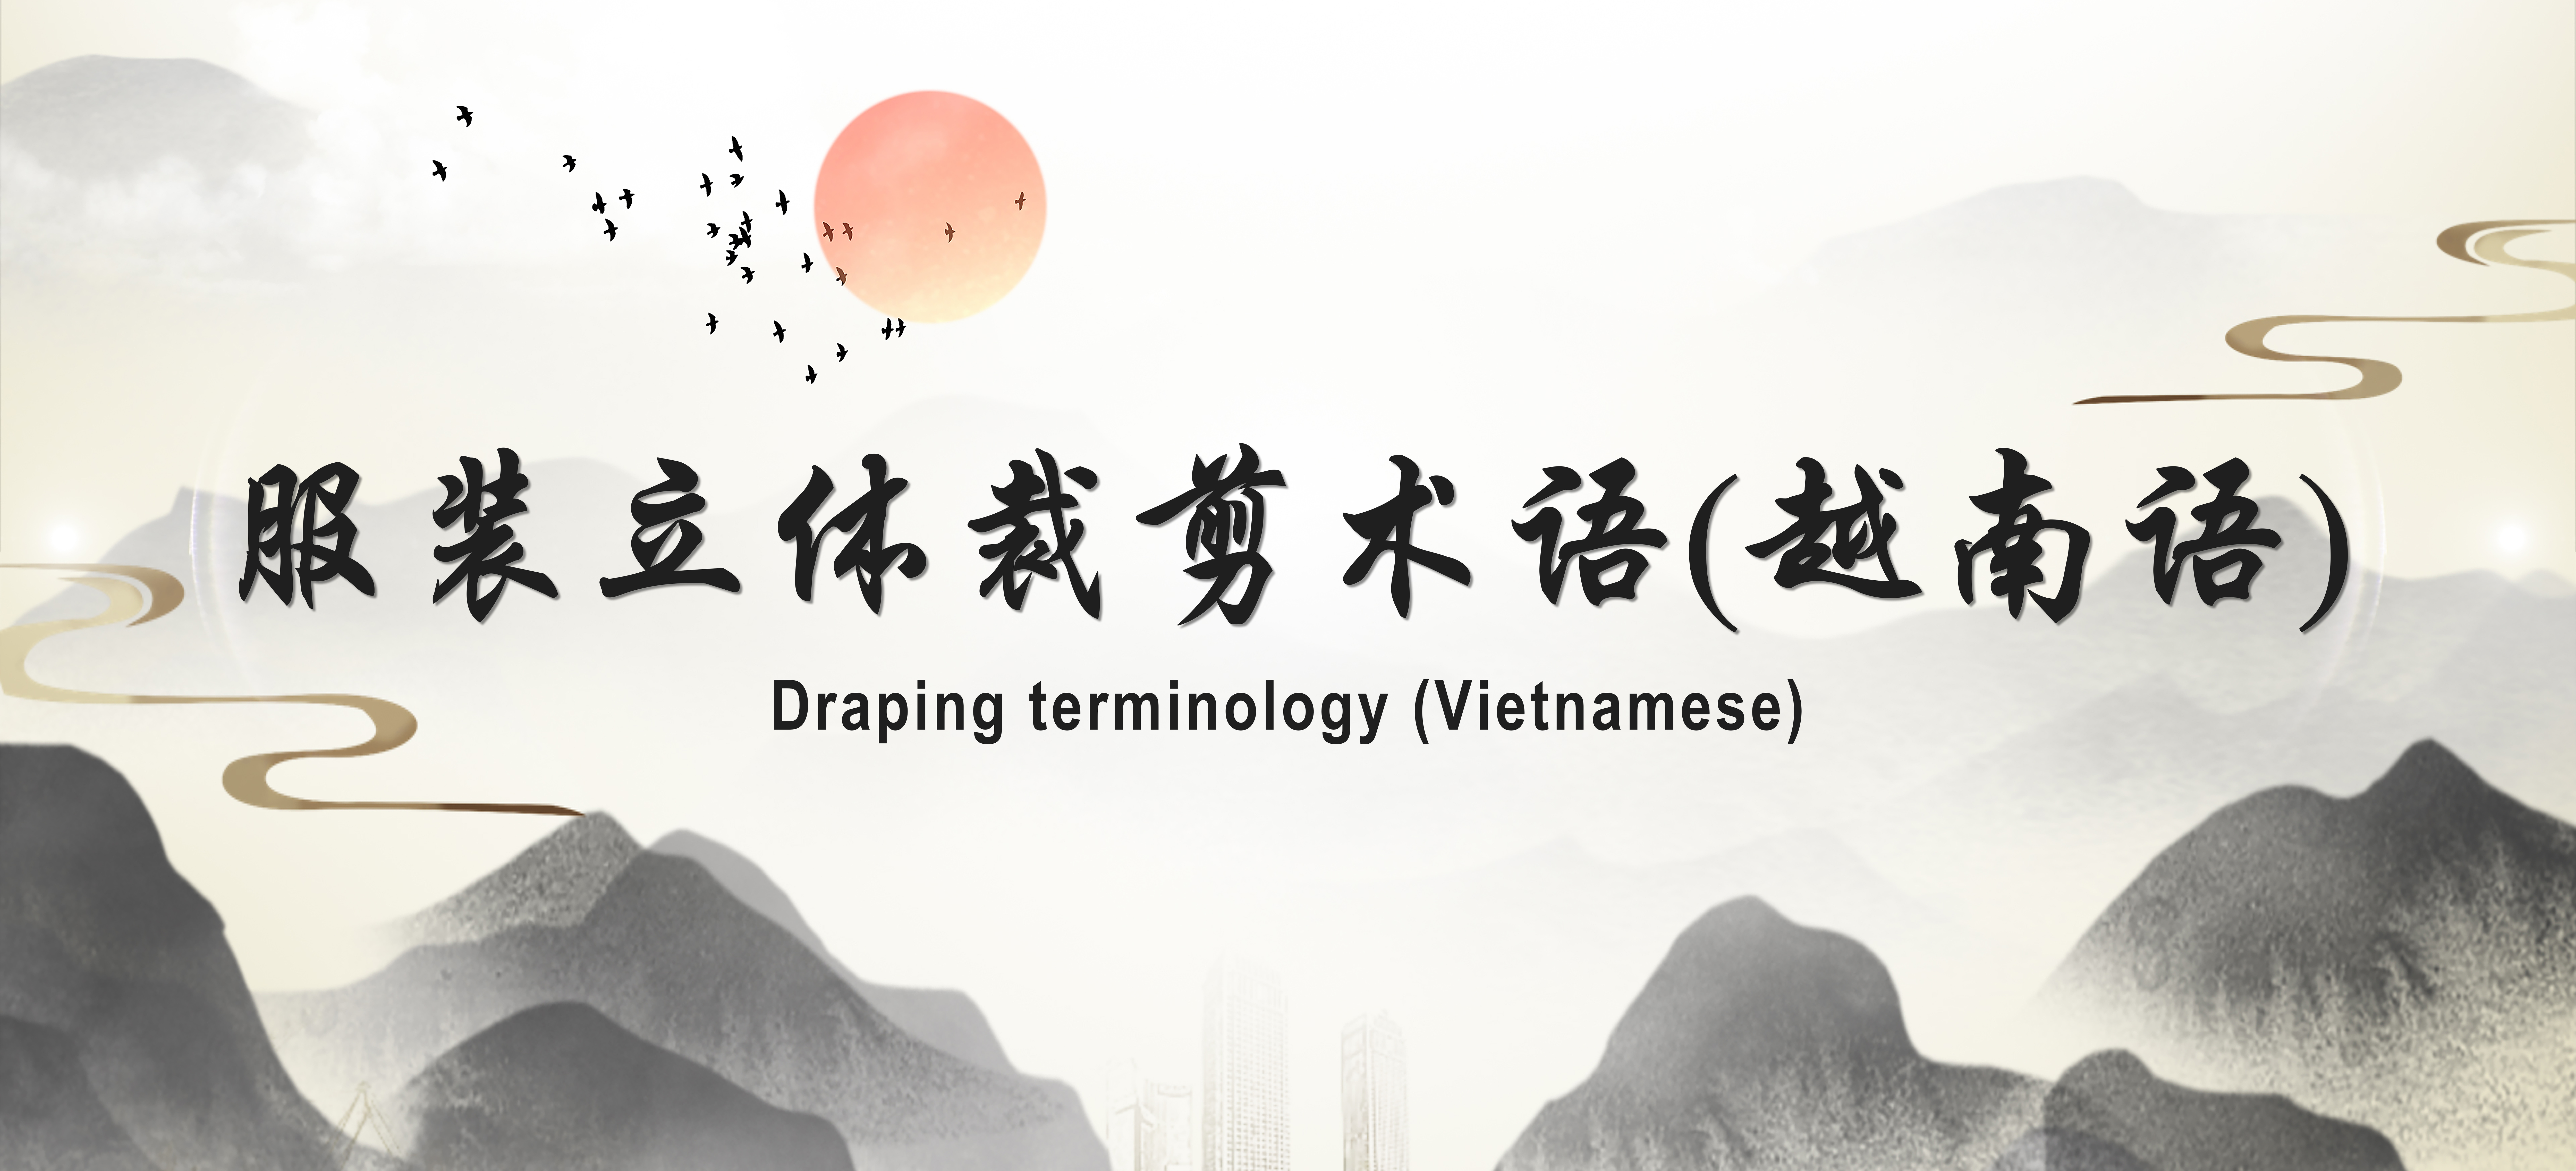 Draping terminology (Vietnamese)